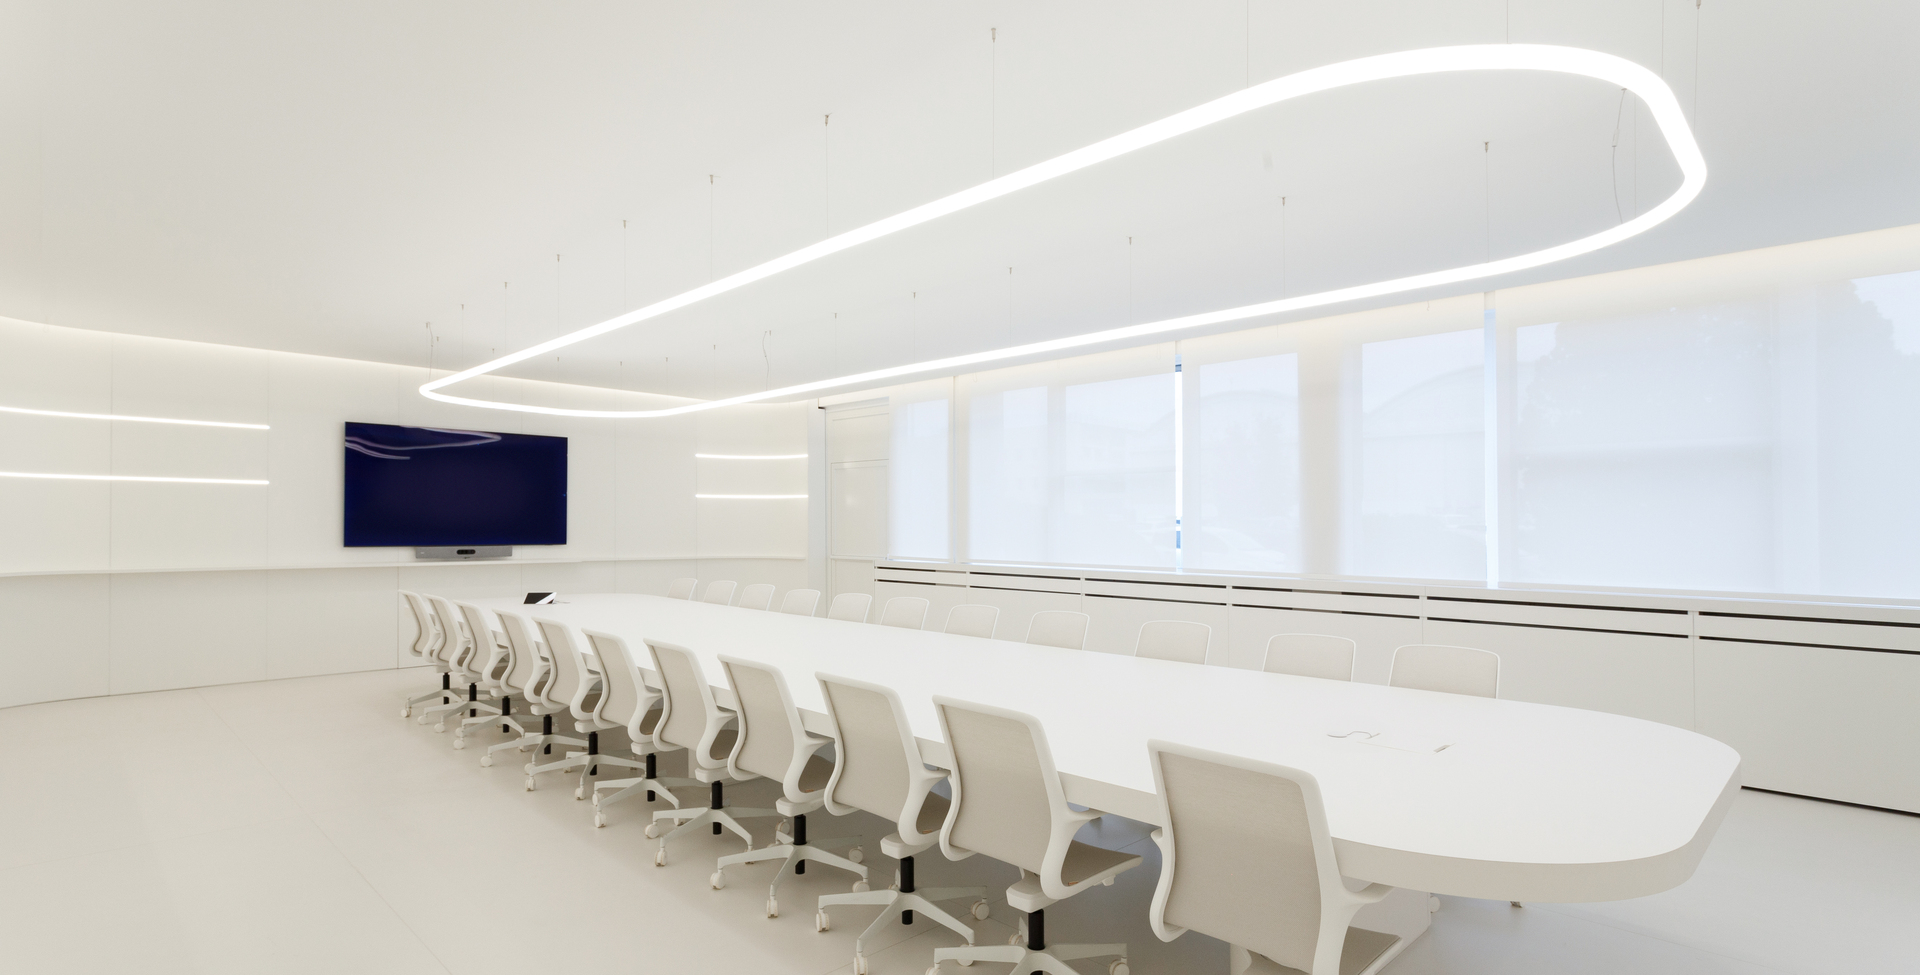 Image of Alphabet of Light System inside a meeting room.